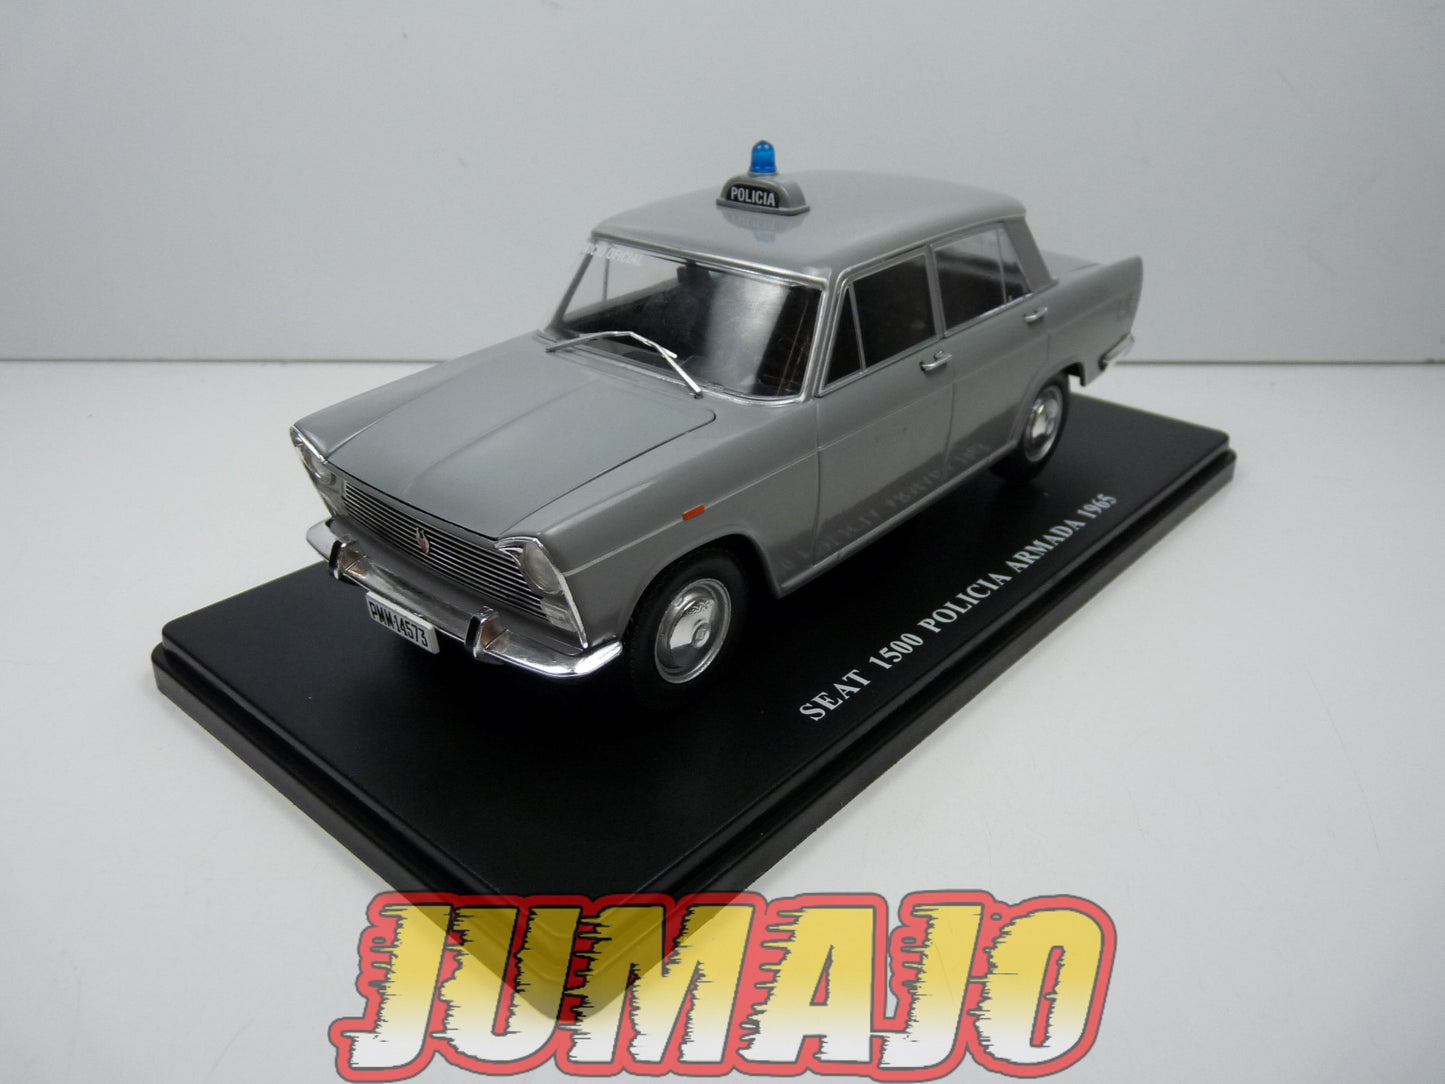 PVQ2 Voiture 1/24 SALVAT test espagne : SEAT 1500 Policia Armada 1965D 1973 Police